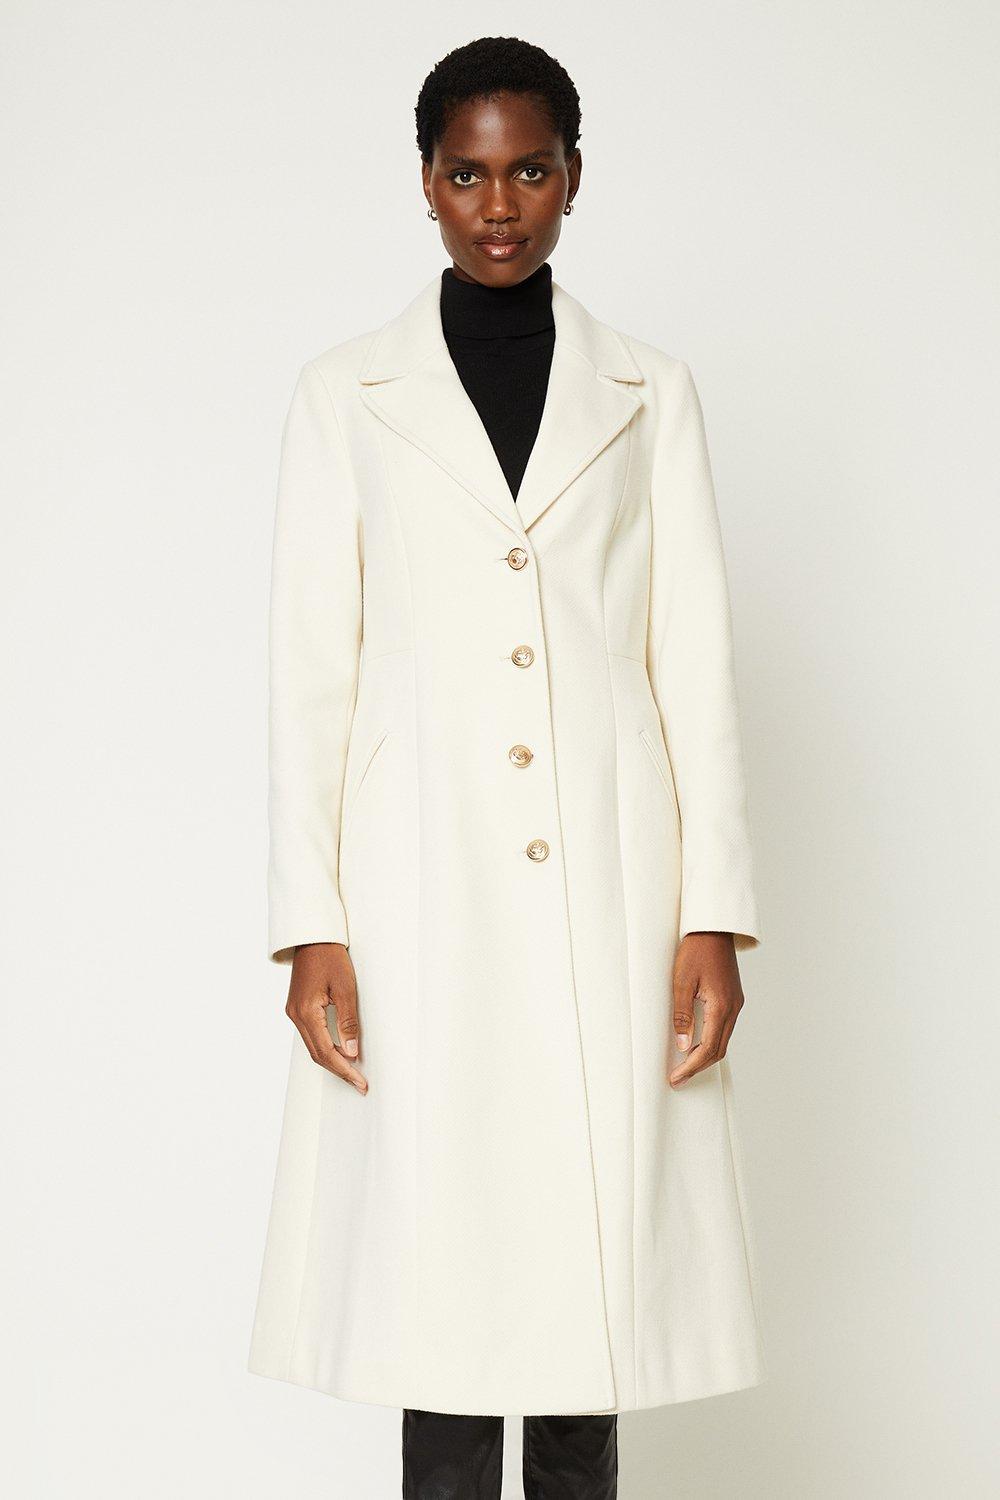 Jackets & Coats, Twill Fit And Flare Coat